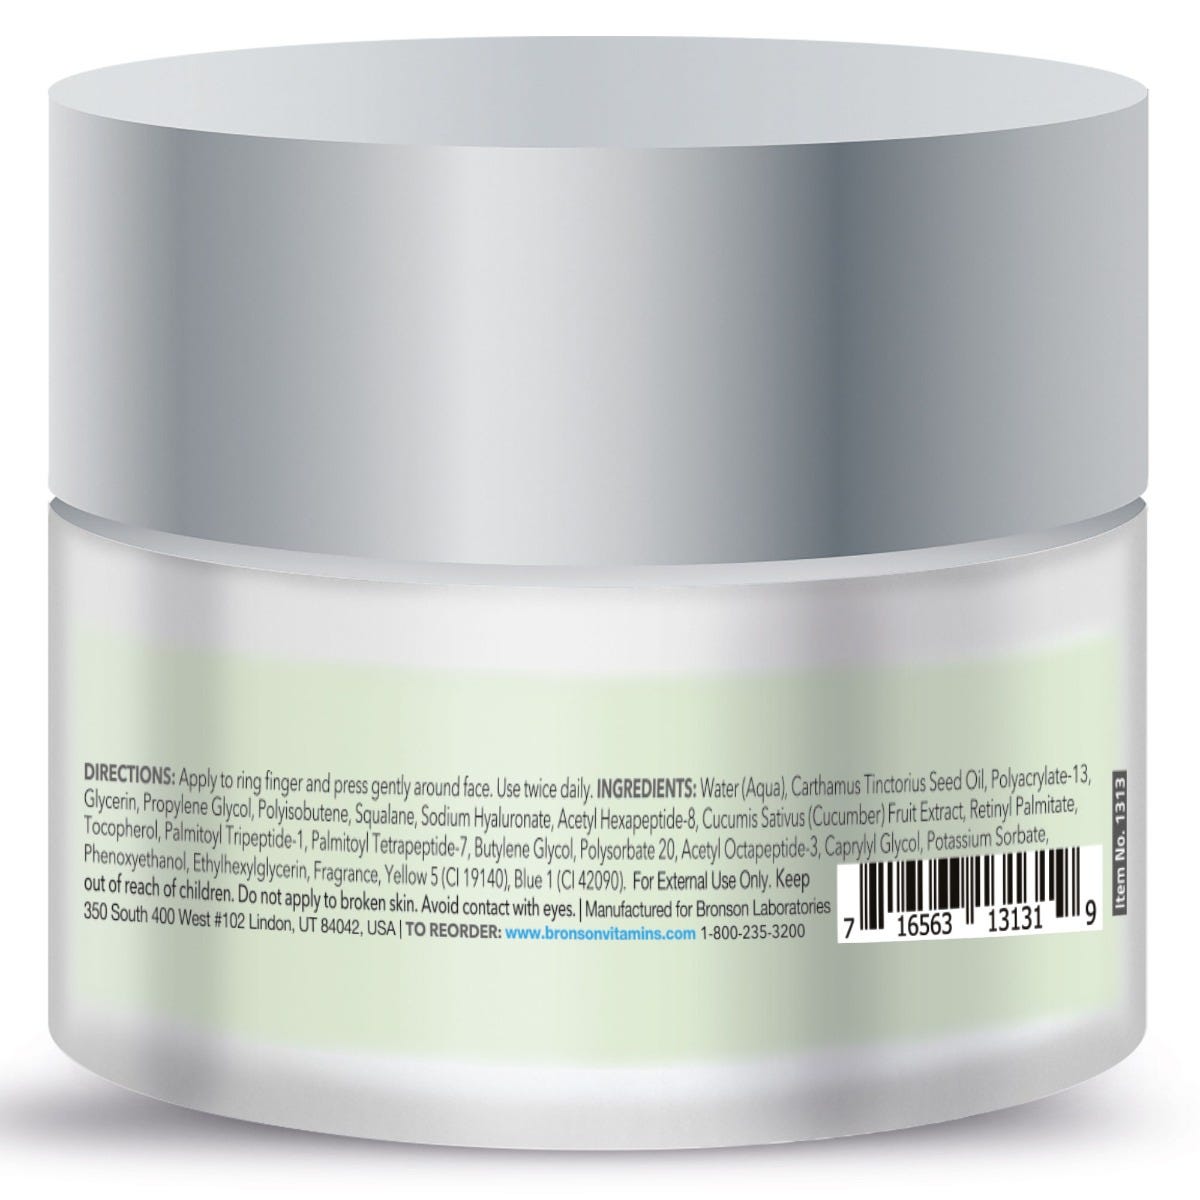 Bronson Vitamins eblume® Anti-aging Cucumber Eye Cream Non-GMO - 0.53 oz, Item #1313, Back Label, Directions, Ingredients, Warnings